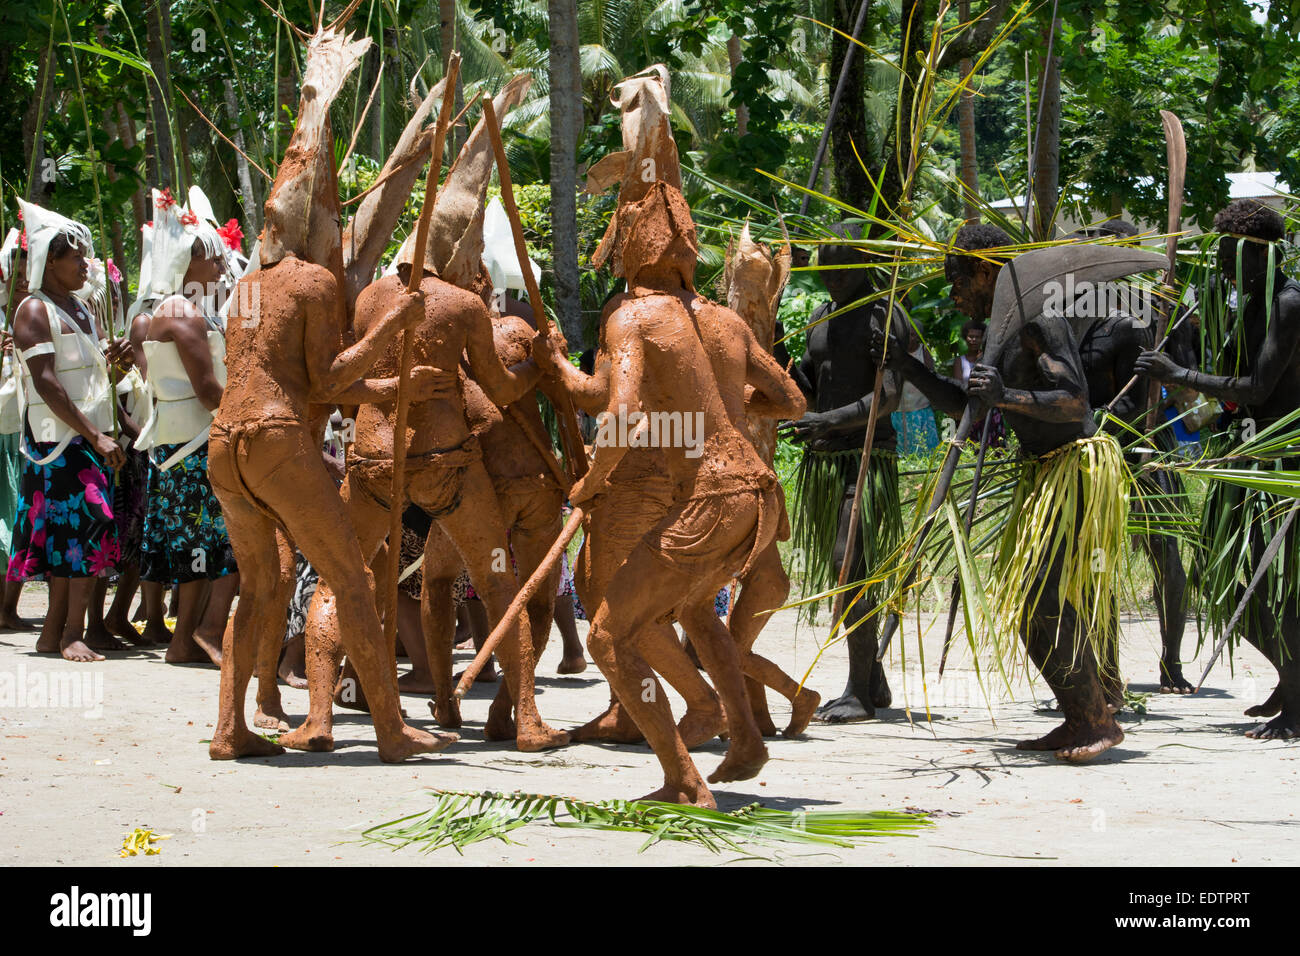 La Melanesia, Isole Salomone, isola di Owaraha o Owa Raha (precedentemente noto come Santa Ana), Gupuna aka Ghupuna. Gli uomini di fango. Foto Stock